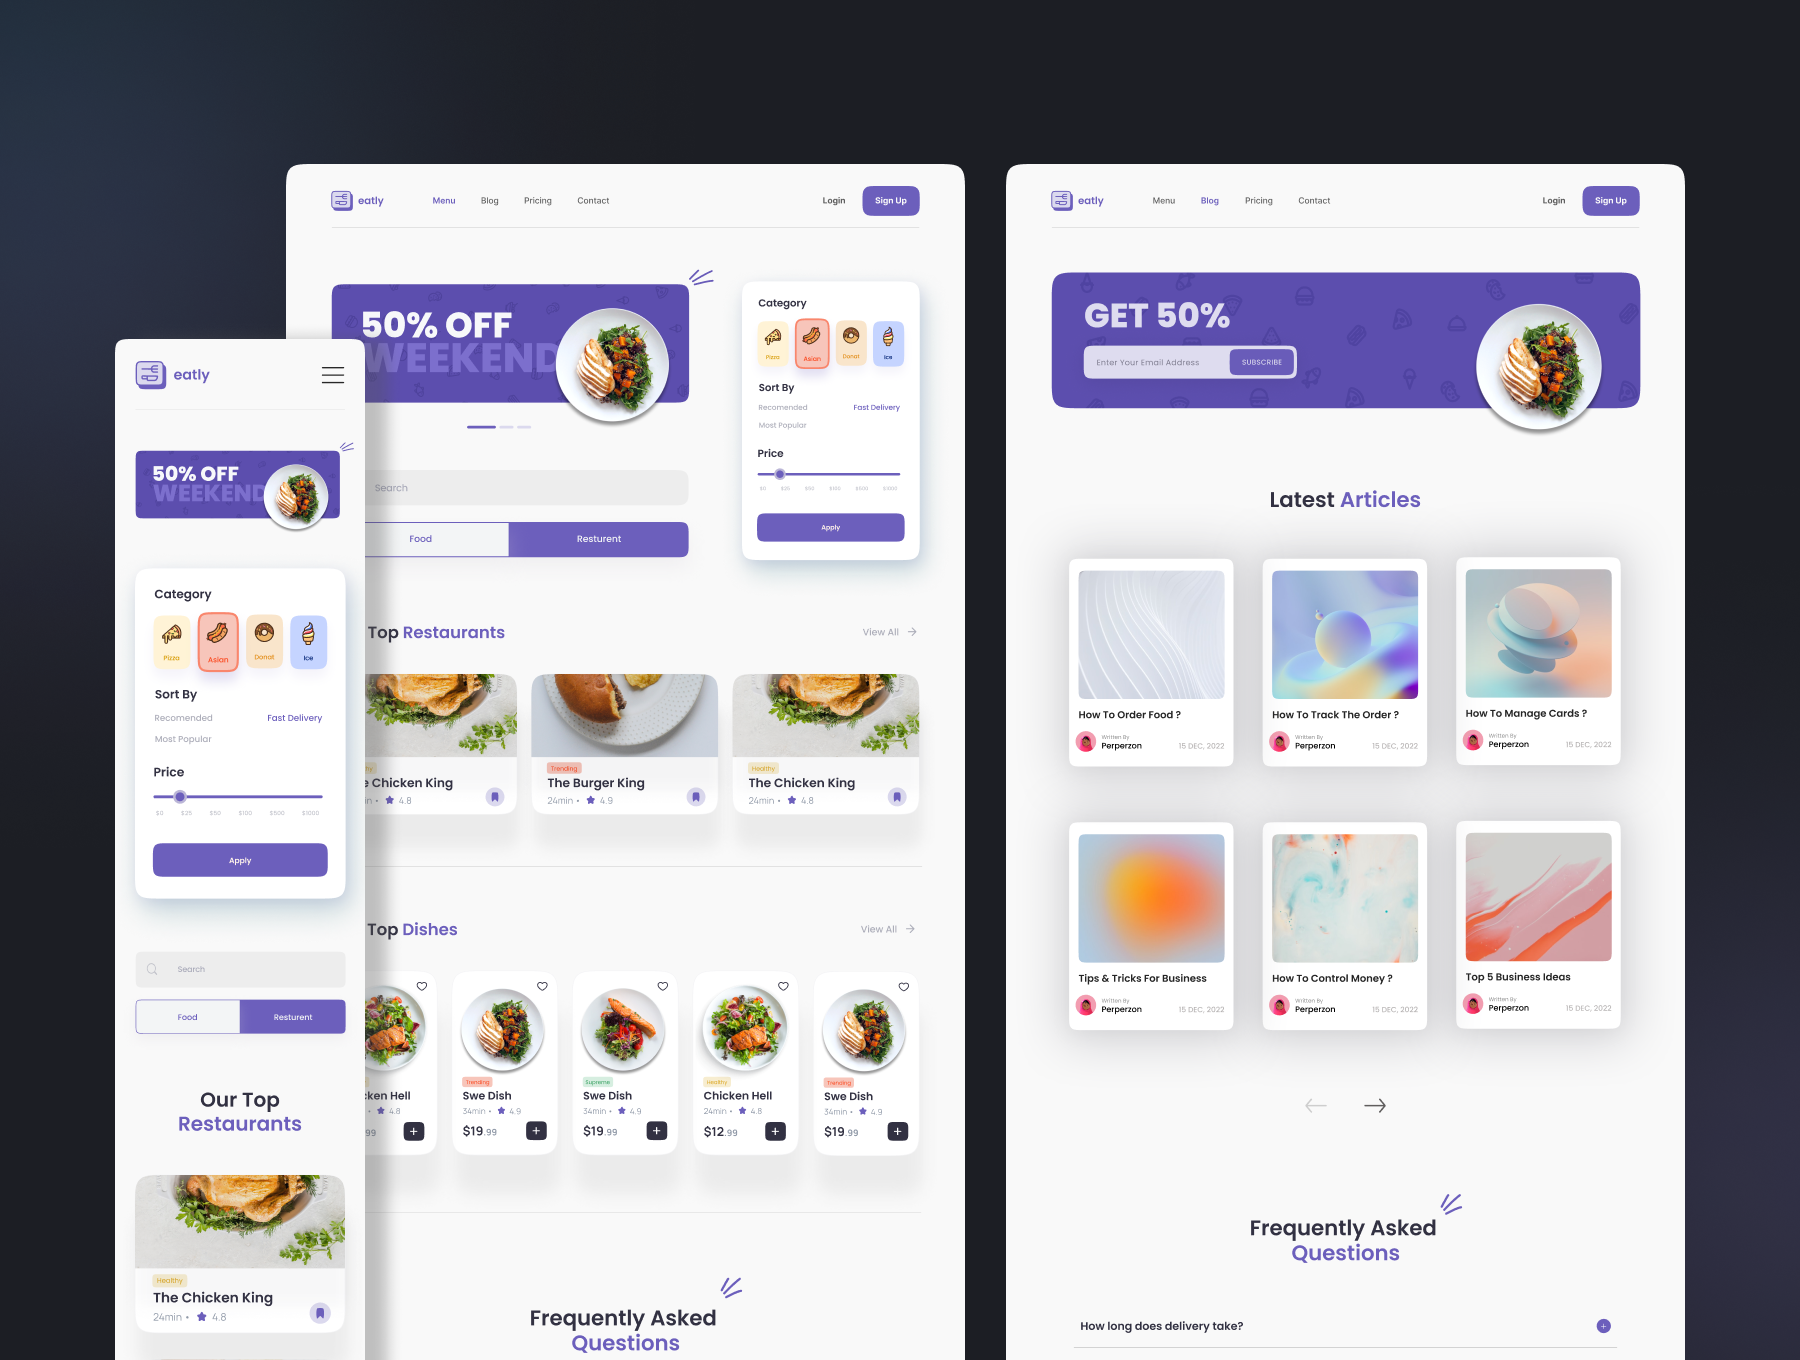 Eatly-食品送餐落地页和Web UI工具包 Eatly - Food Delivery Landing Page & Web UI KIT figma格式-UI/UX-到位啦UI